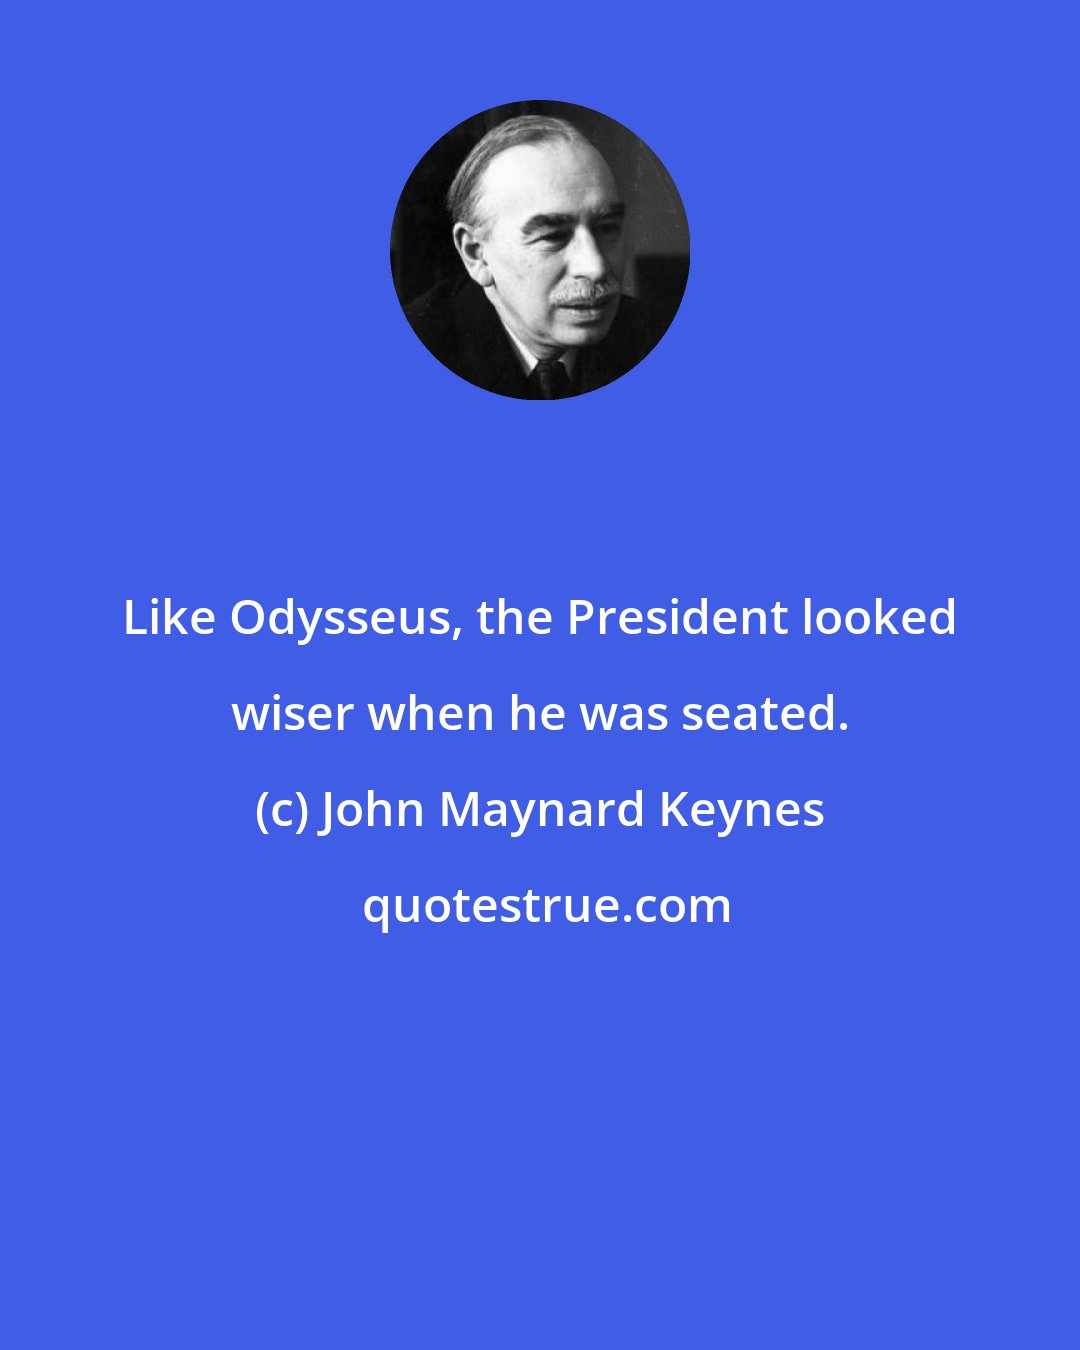 John Maynard Keynes: Like Odysseus, the President looked wiser when he was seated.